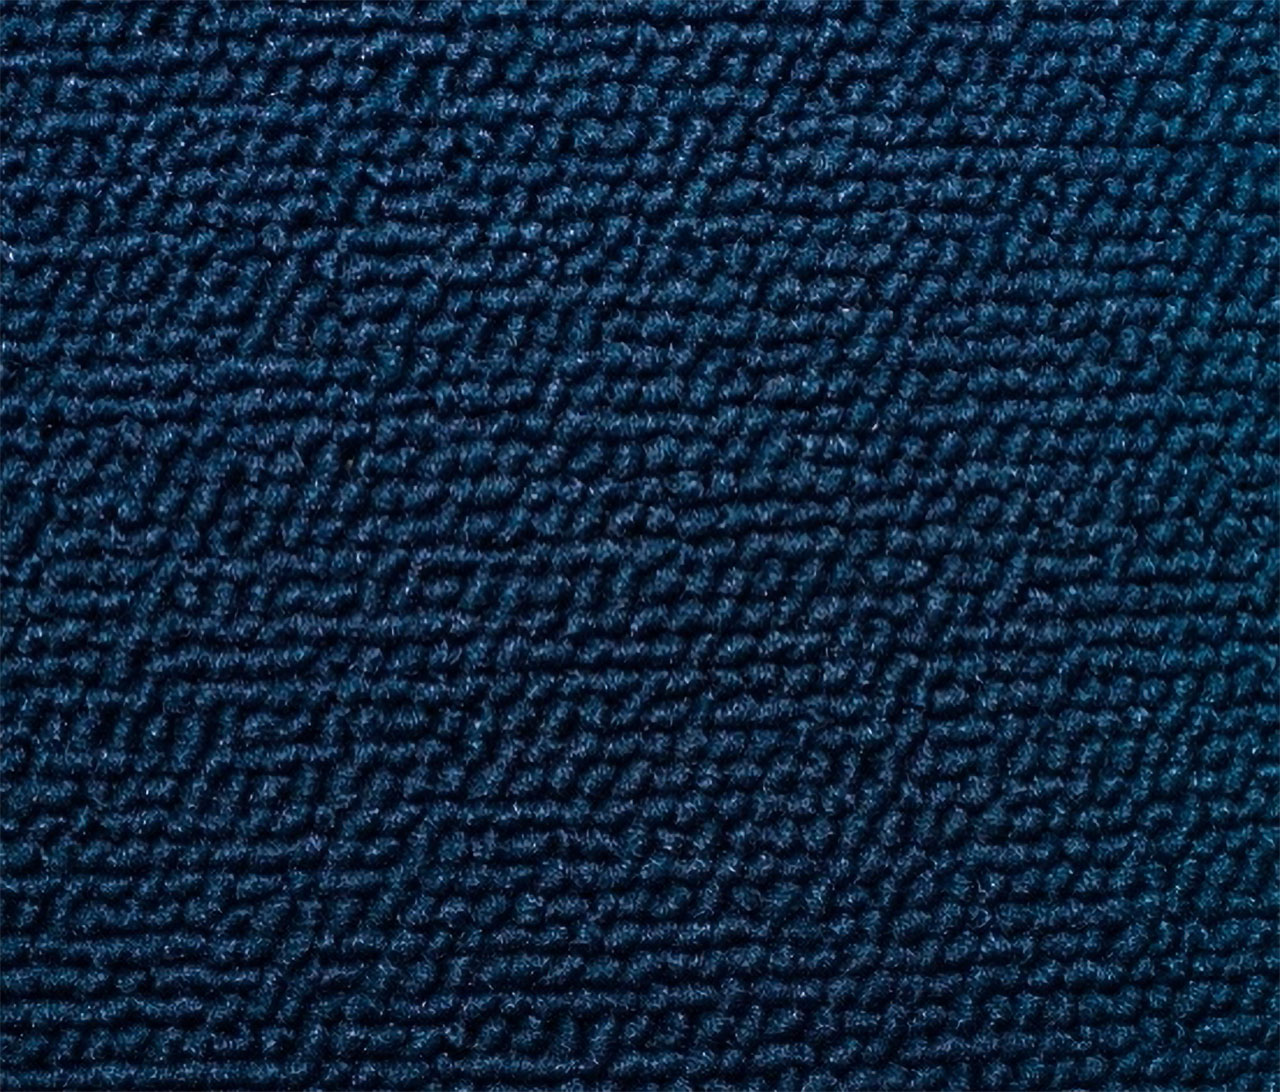 Holden Special HD Special Sedan D55 Contessa & Sceptre Blue Carpet (Image 1 of 1)